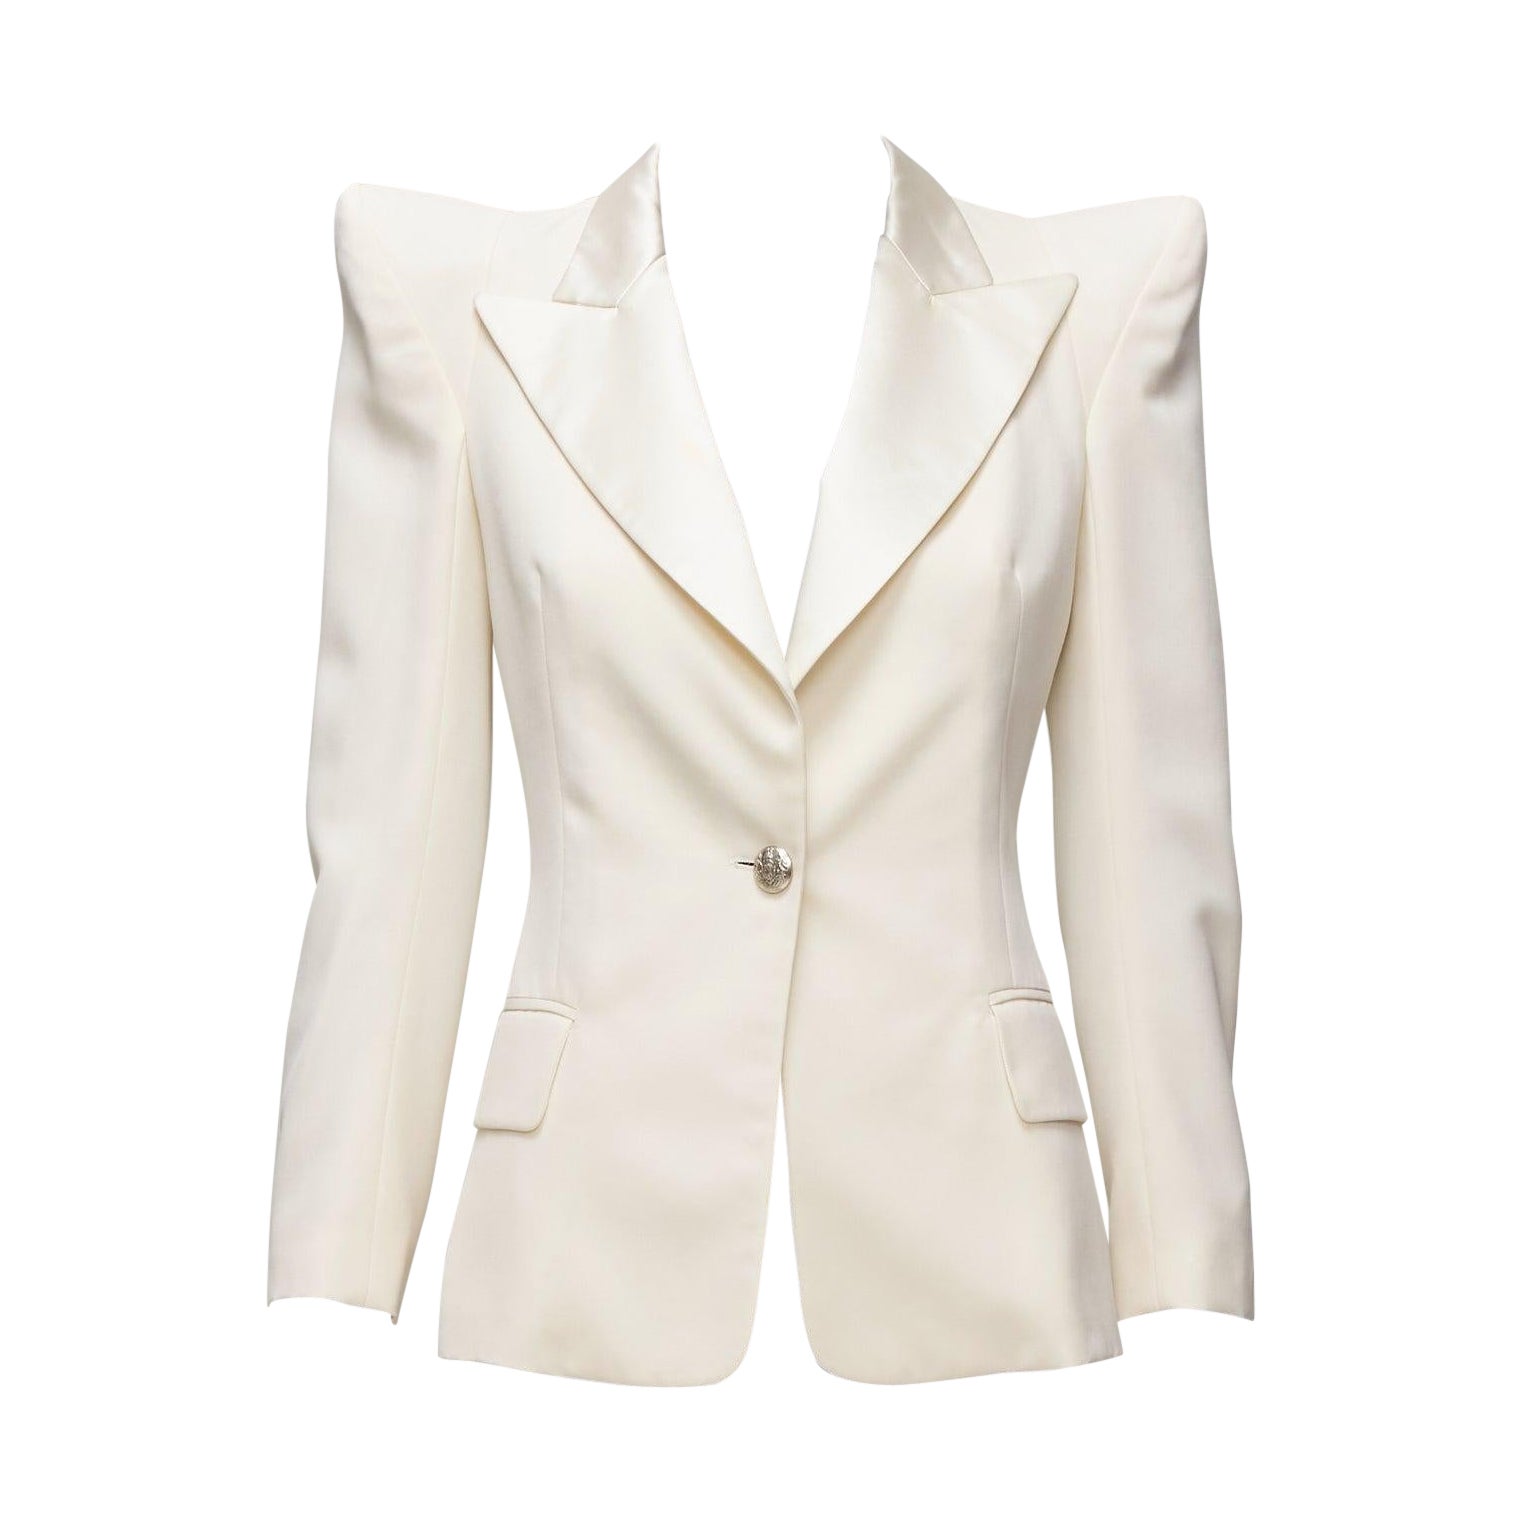 BALMAIN cream pagoda peak power shoulder single button tuxedo jacket FR38 S For Sale